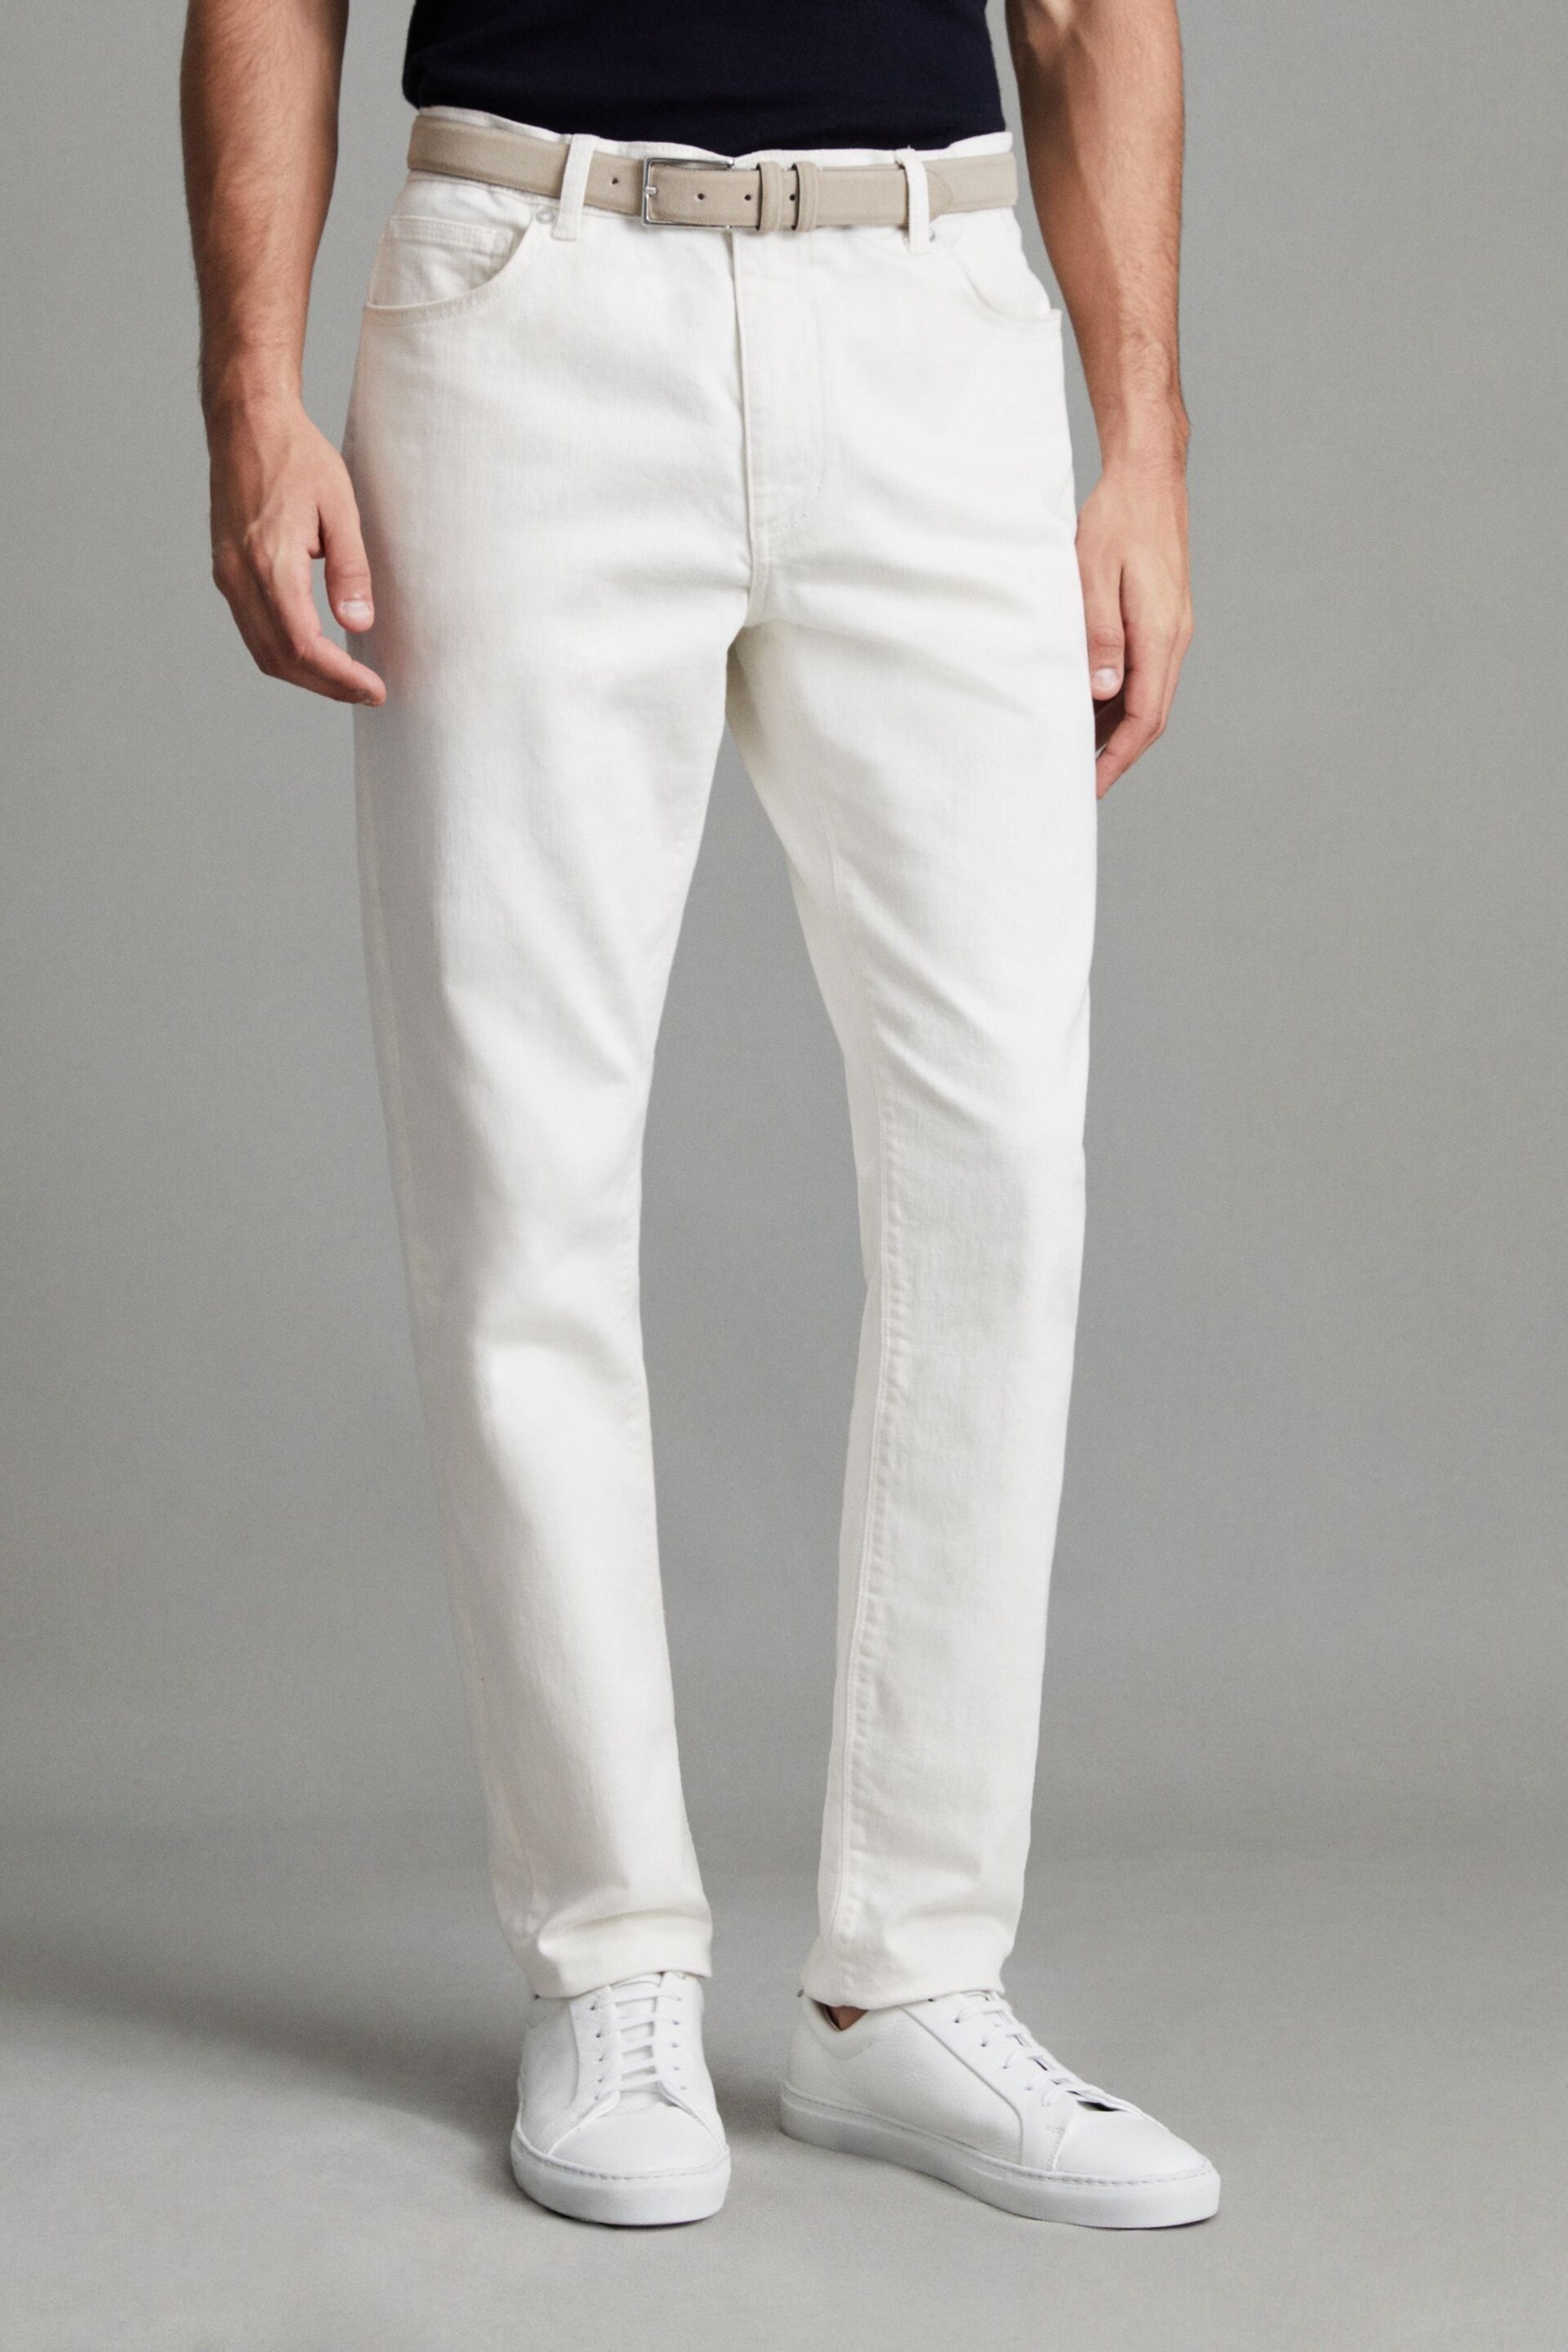 Reiss Ecru Santorini Tapered Slim Fit Jeans - Image 1 of 7